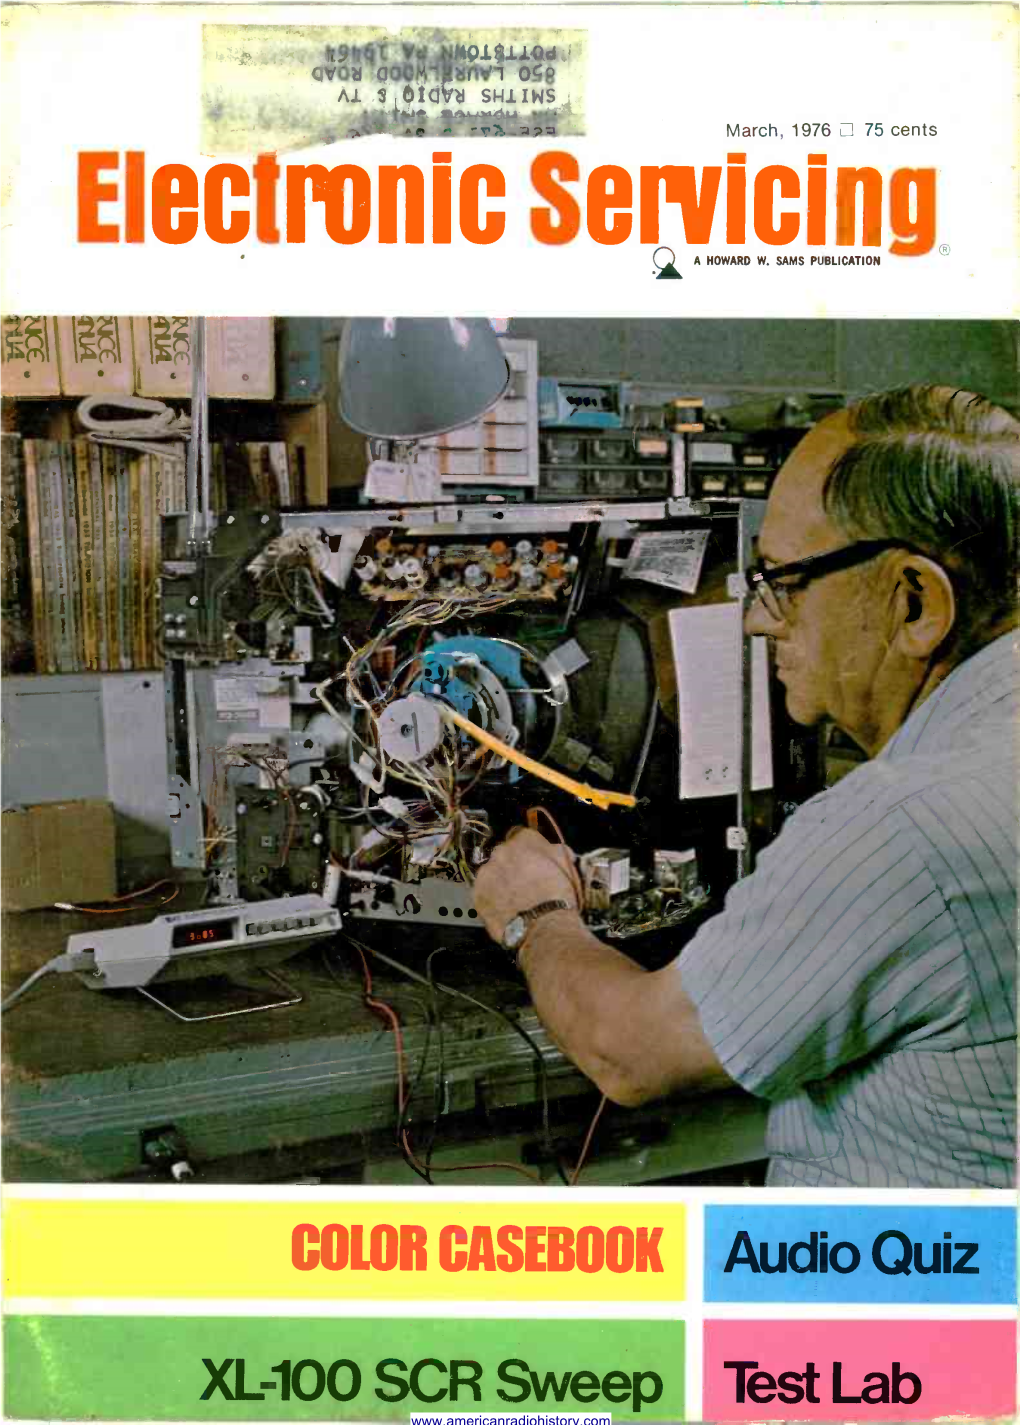 Electronic Servicin R a a HOWARD W